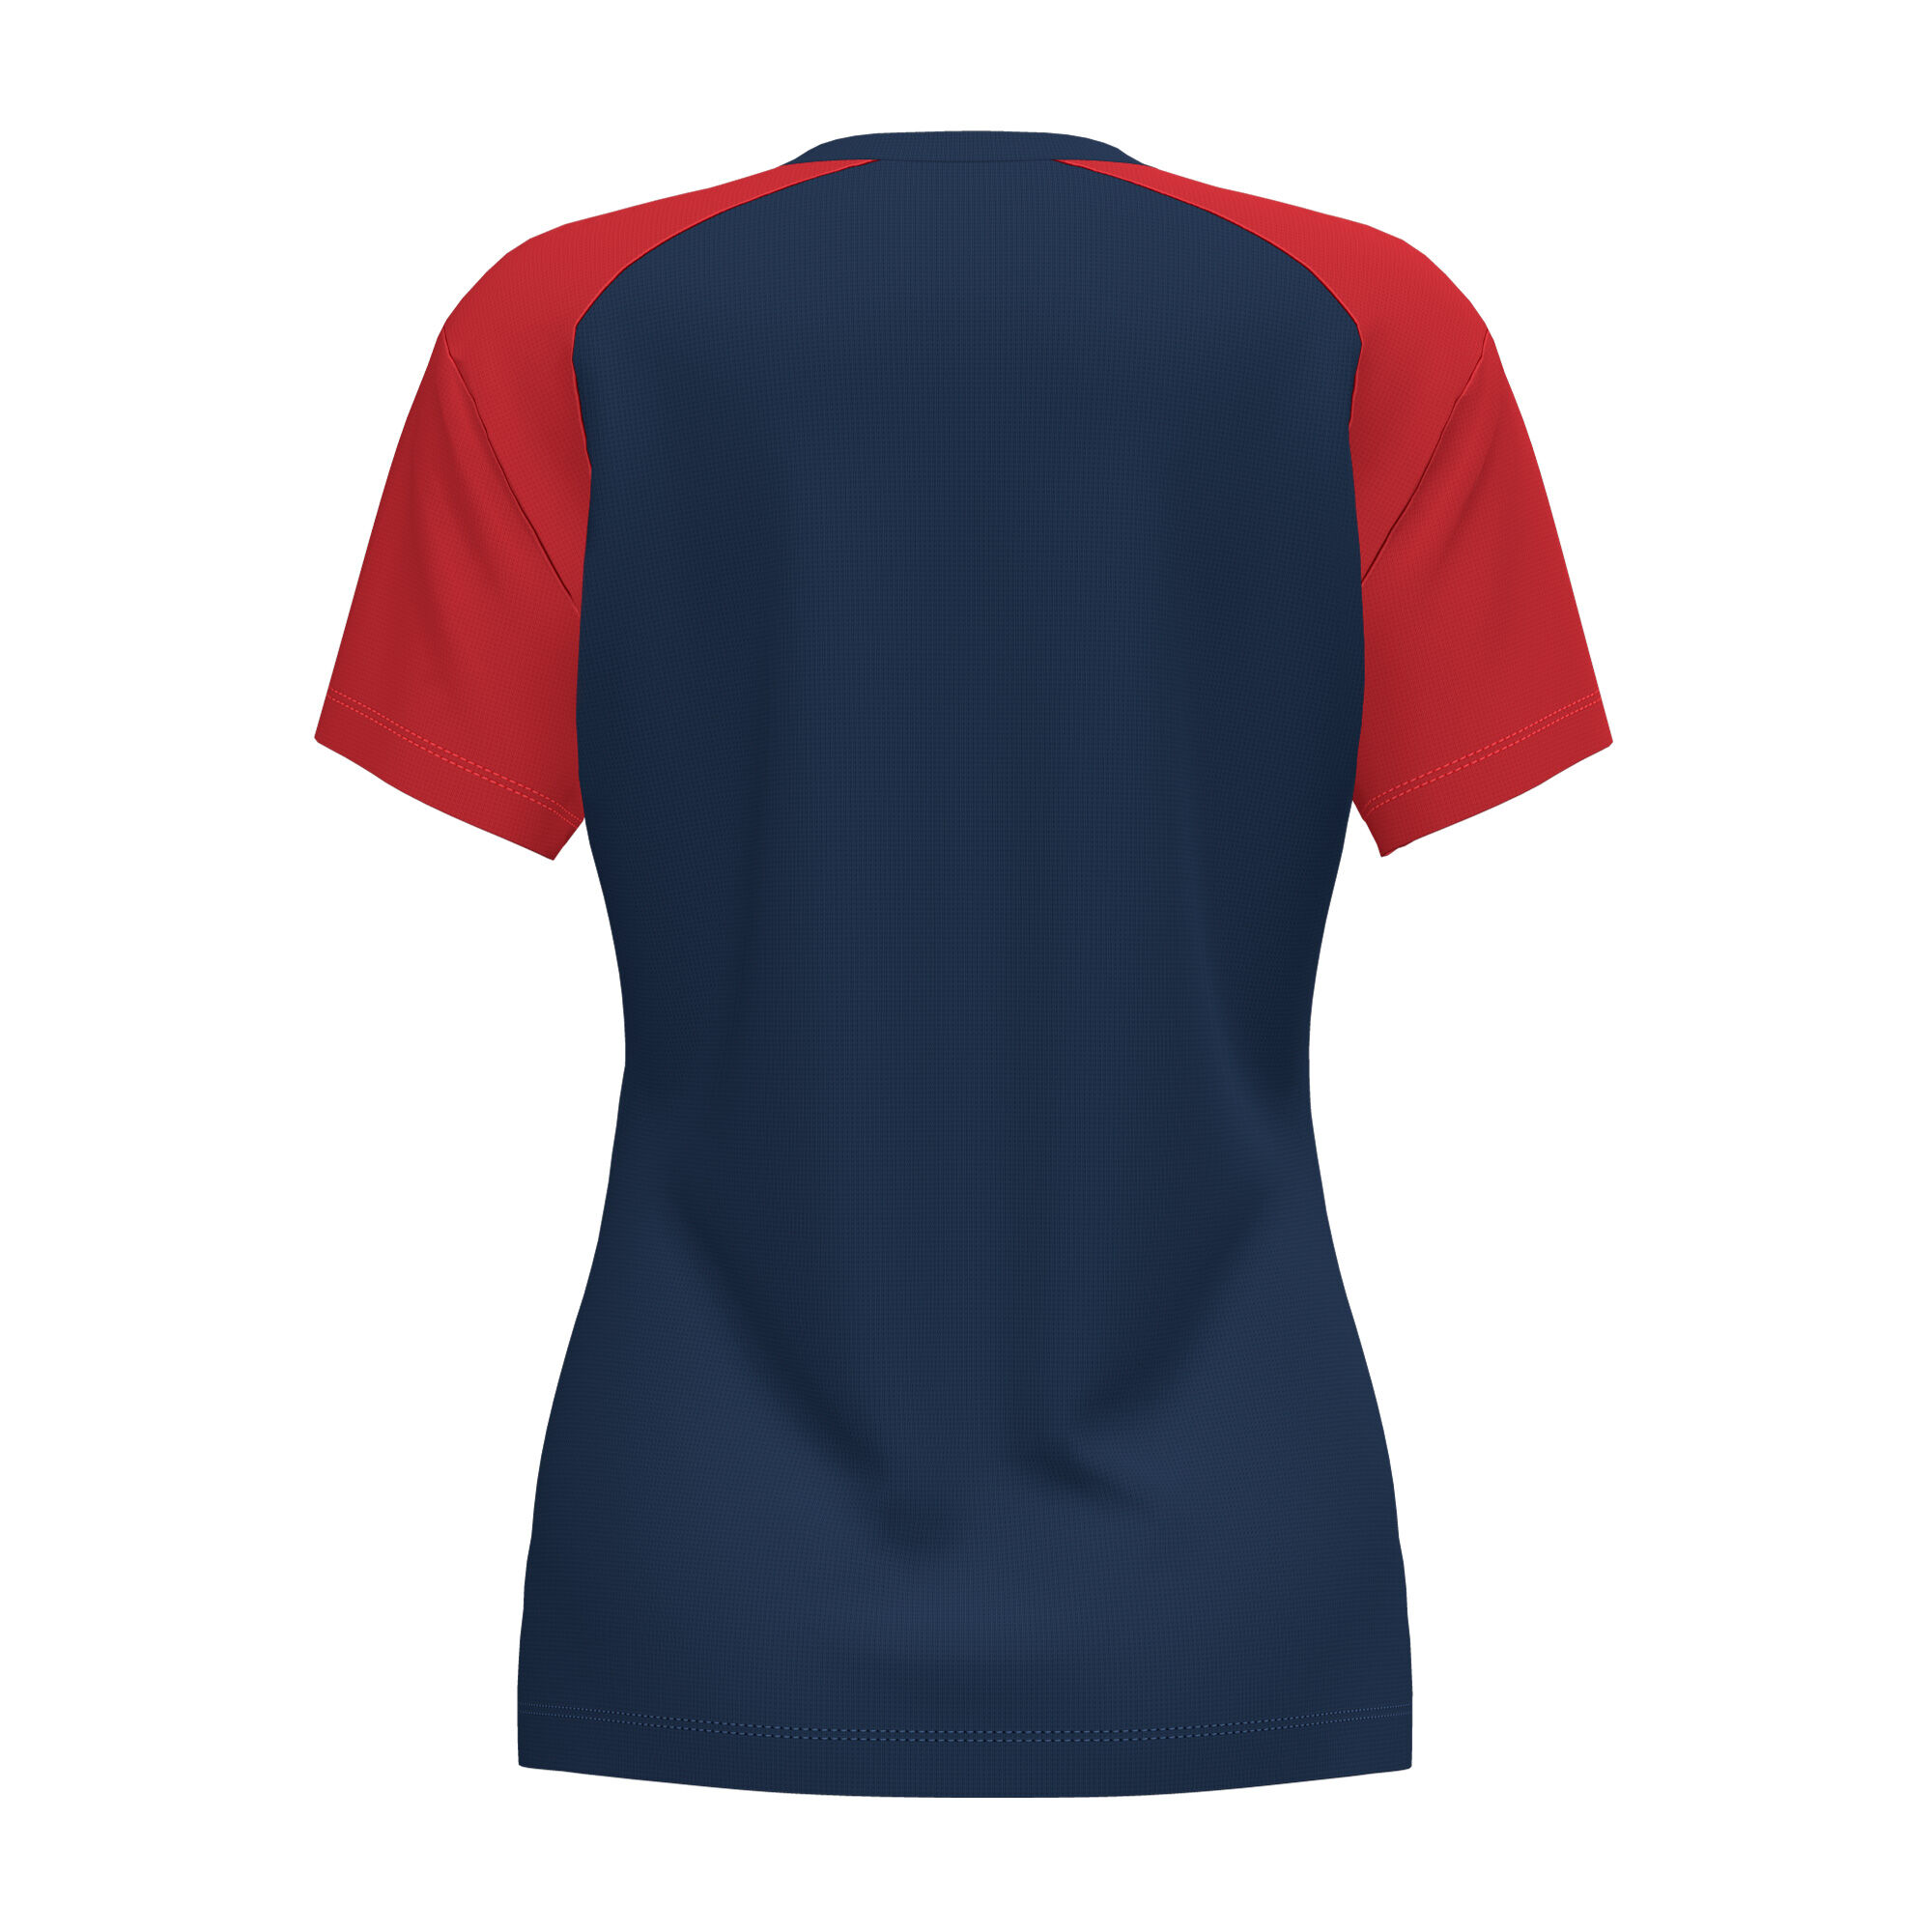 Camiseta manga corta mujer Academy IV marino rojo